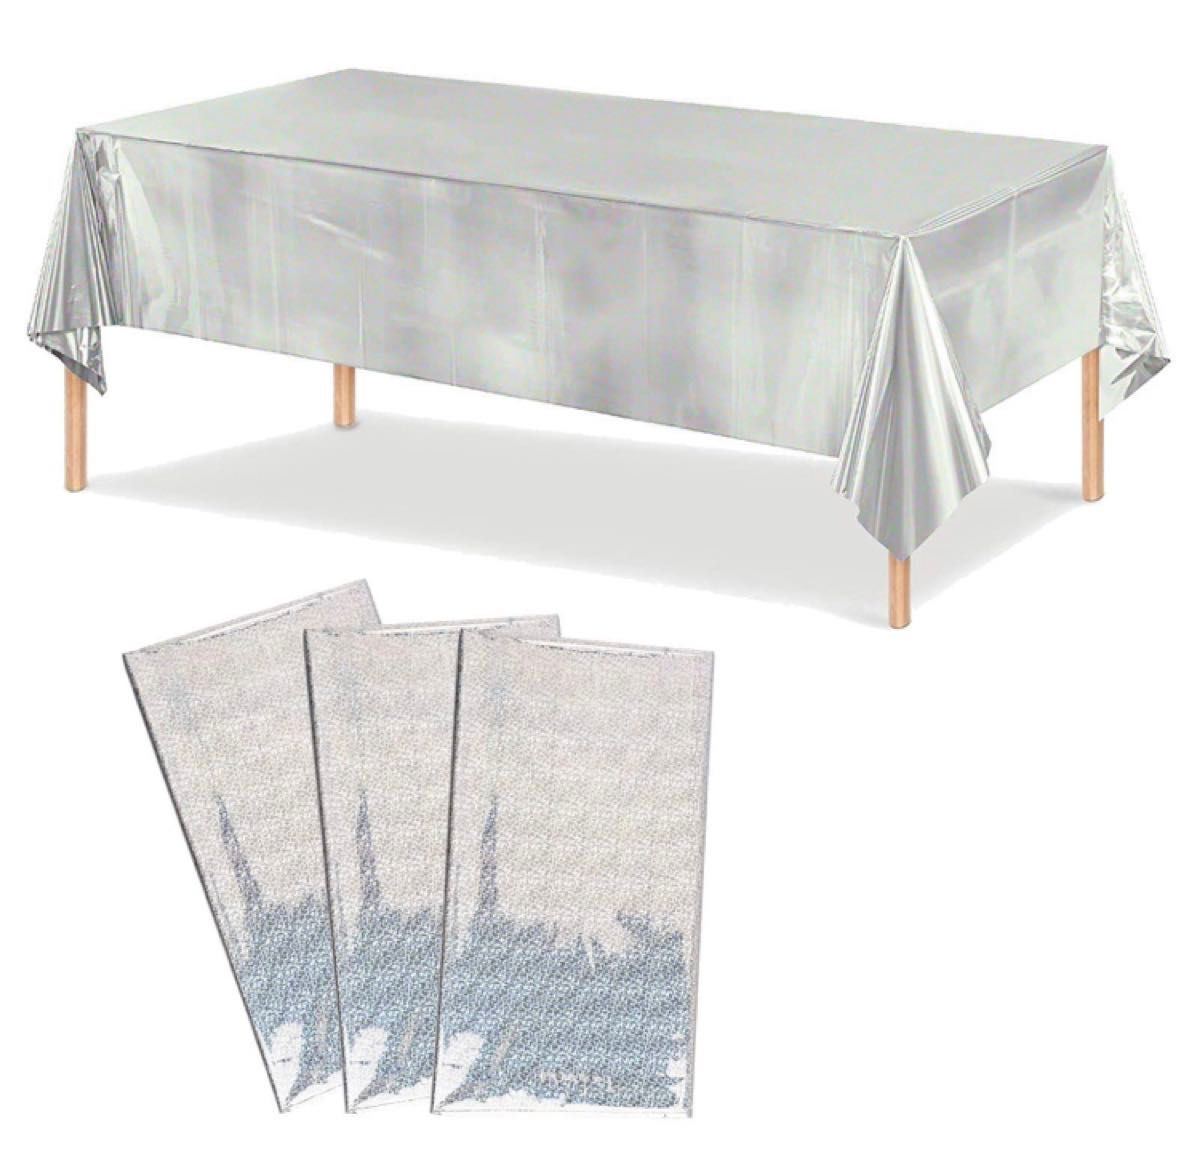 108 x 3パックシルバースパンコールプラスチックテーブルクロス、光沢のある使い捨て長方形のテーブルカバー、結婚式のパーティー